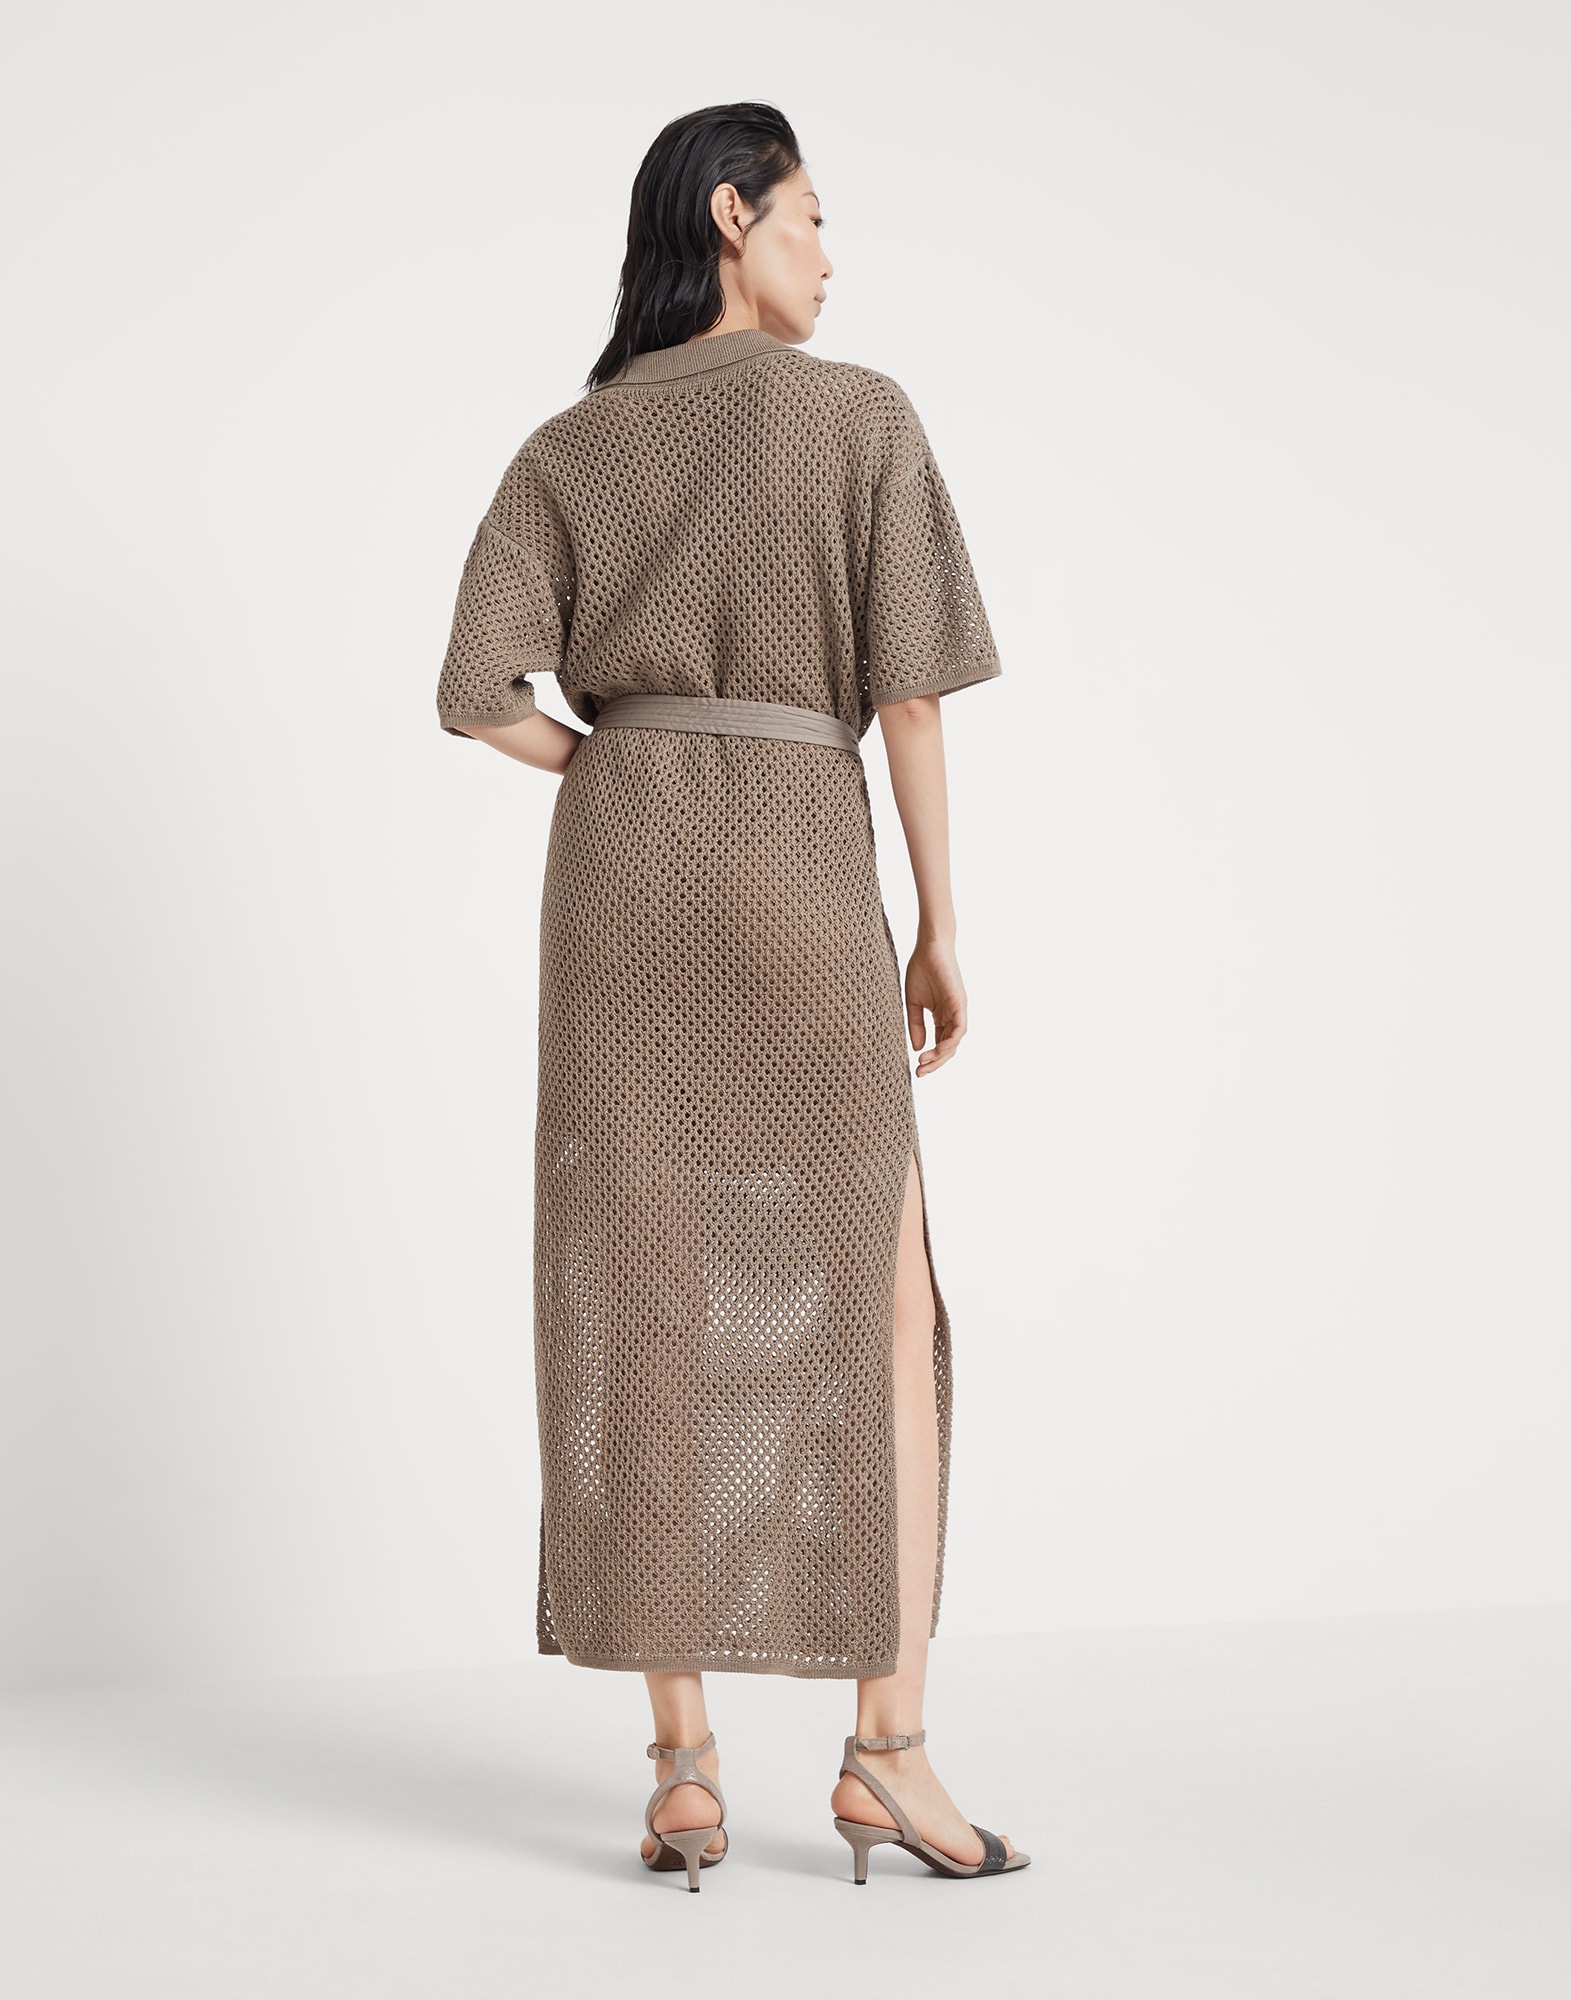 Cotton net knit dress with belt - 2